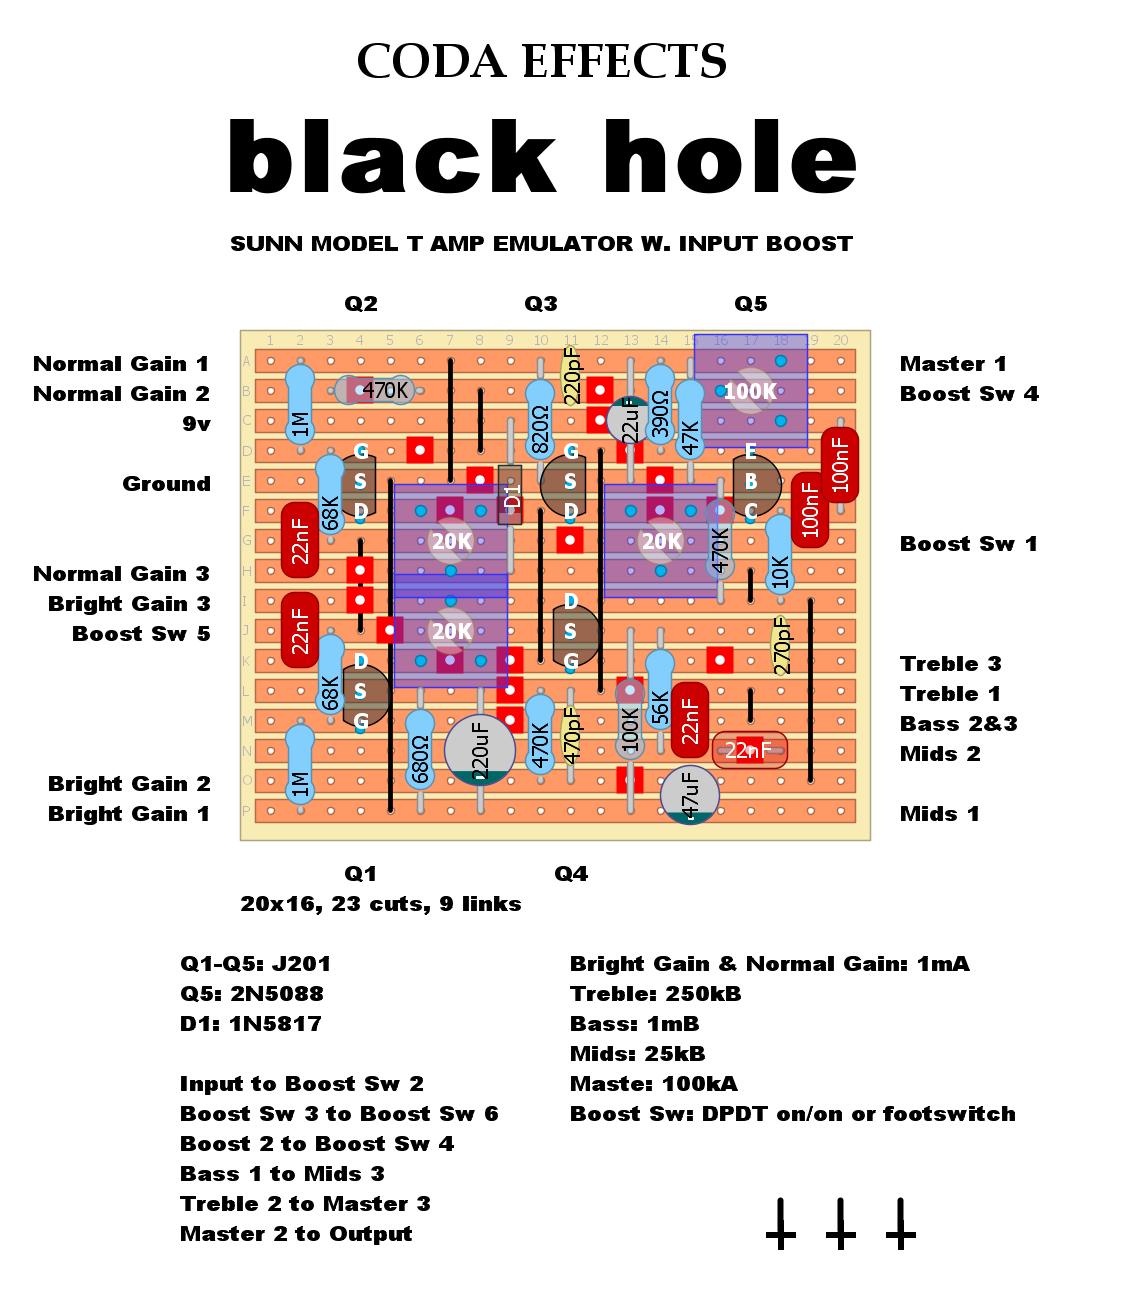 Dirtbox Layouts: Coda Effects Black Hole - Sunn Model T Amp Emulator